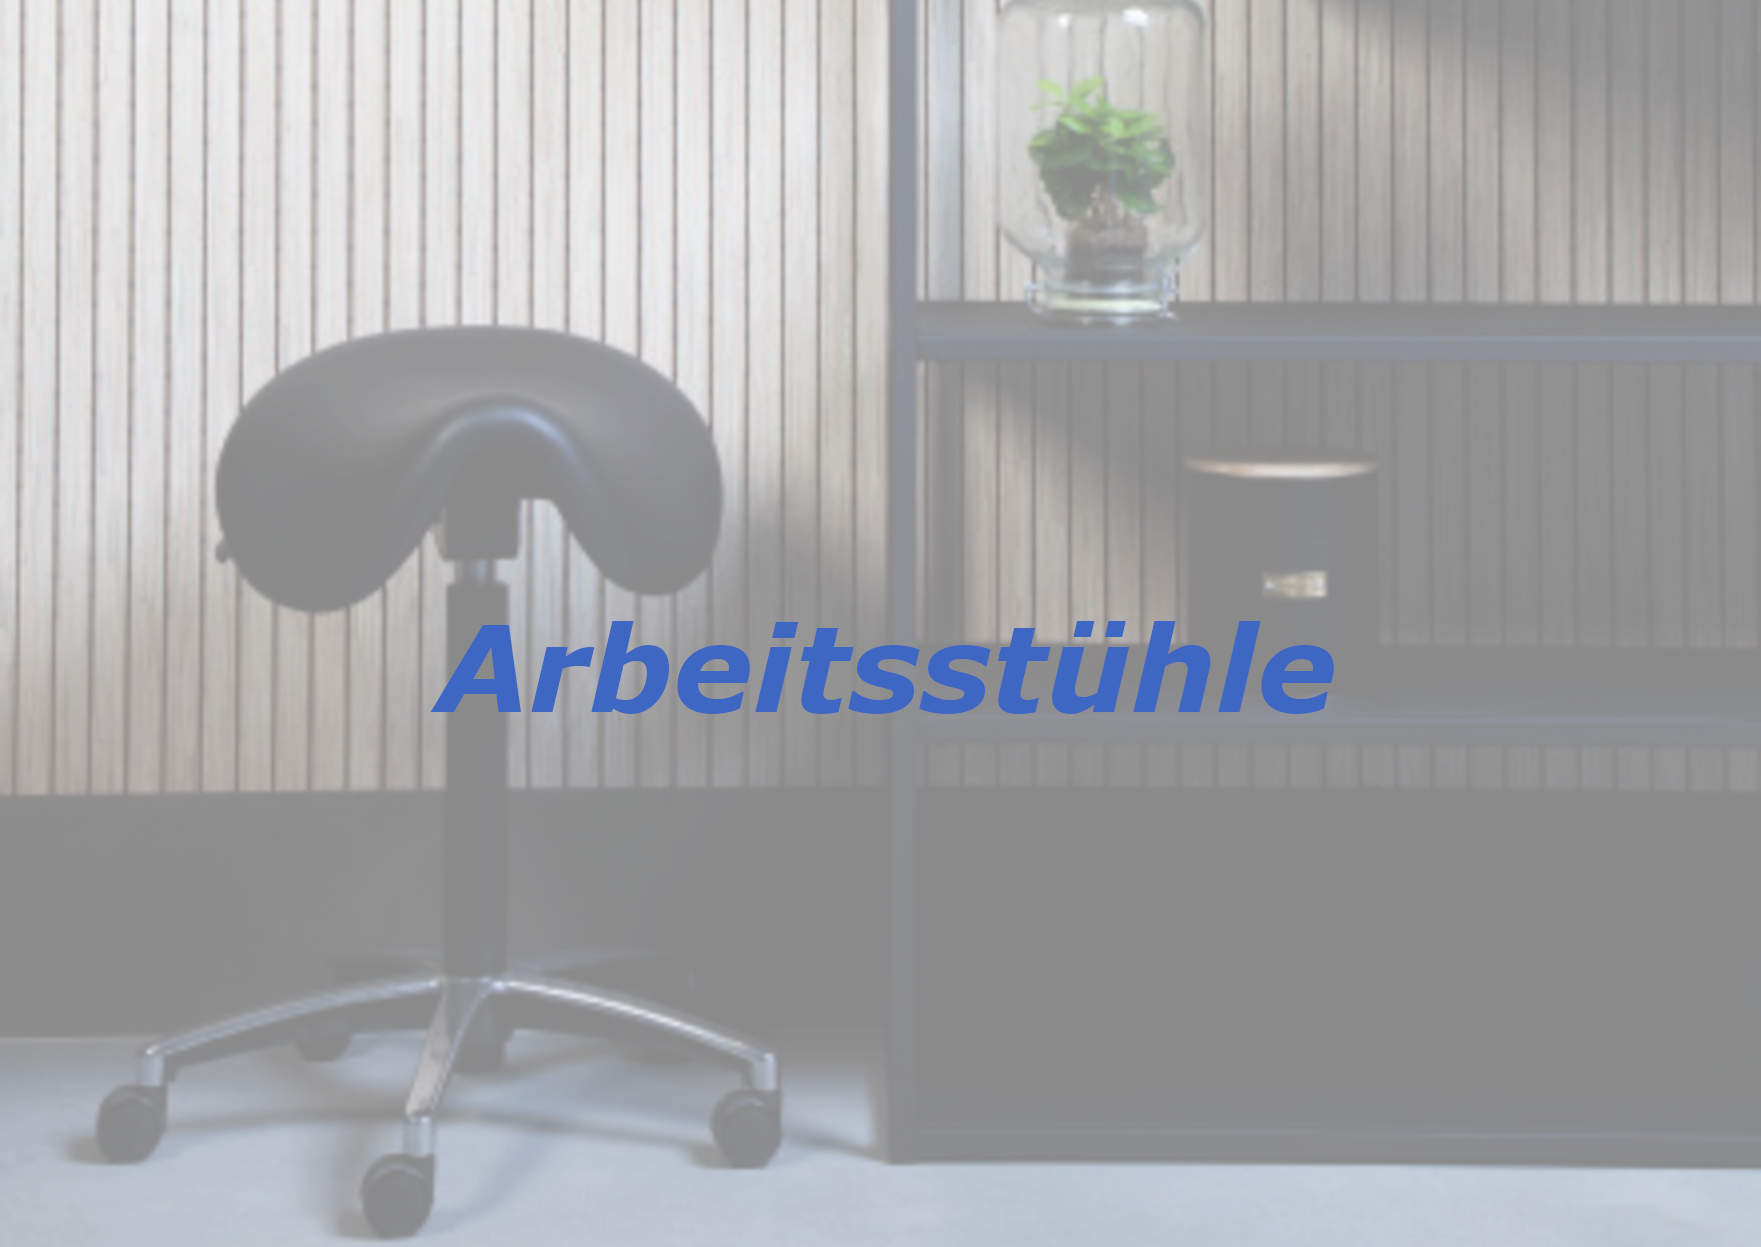 art-office-shop-chairsupply-npr-buerostuehle